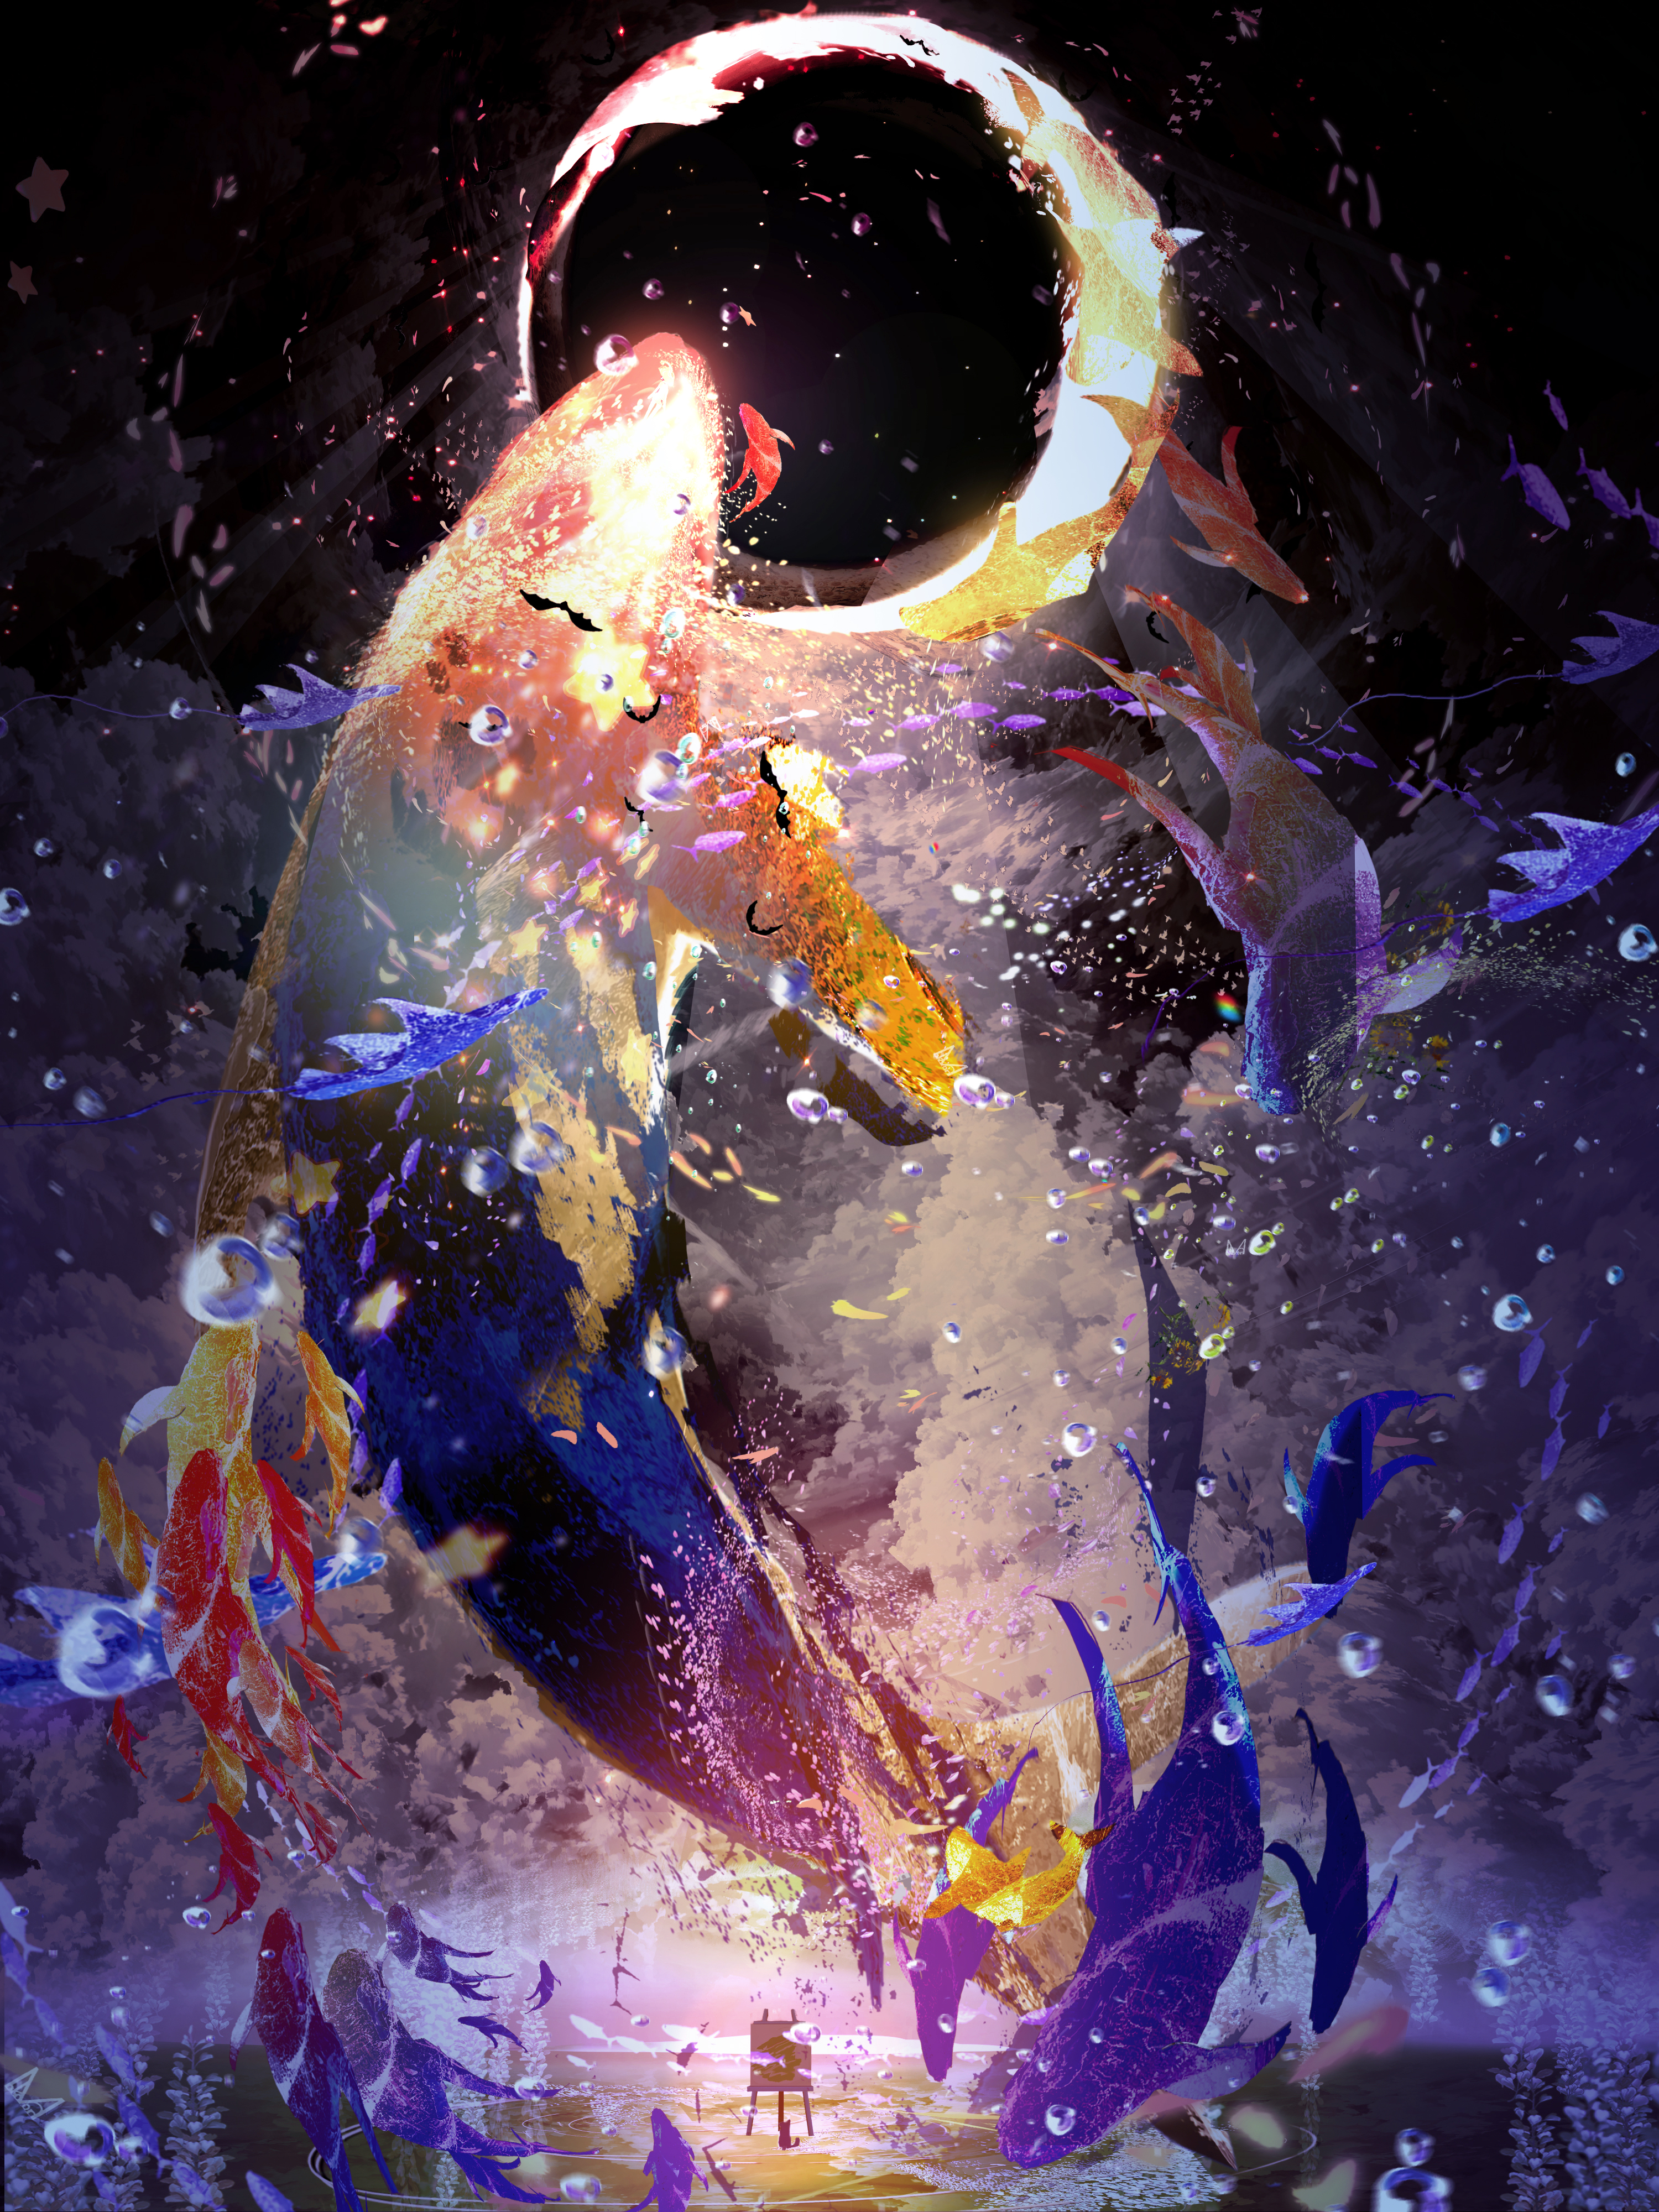 Anime 3000x4000 abstract makoron117 universe Moon portrait display fish water drops